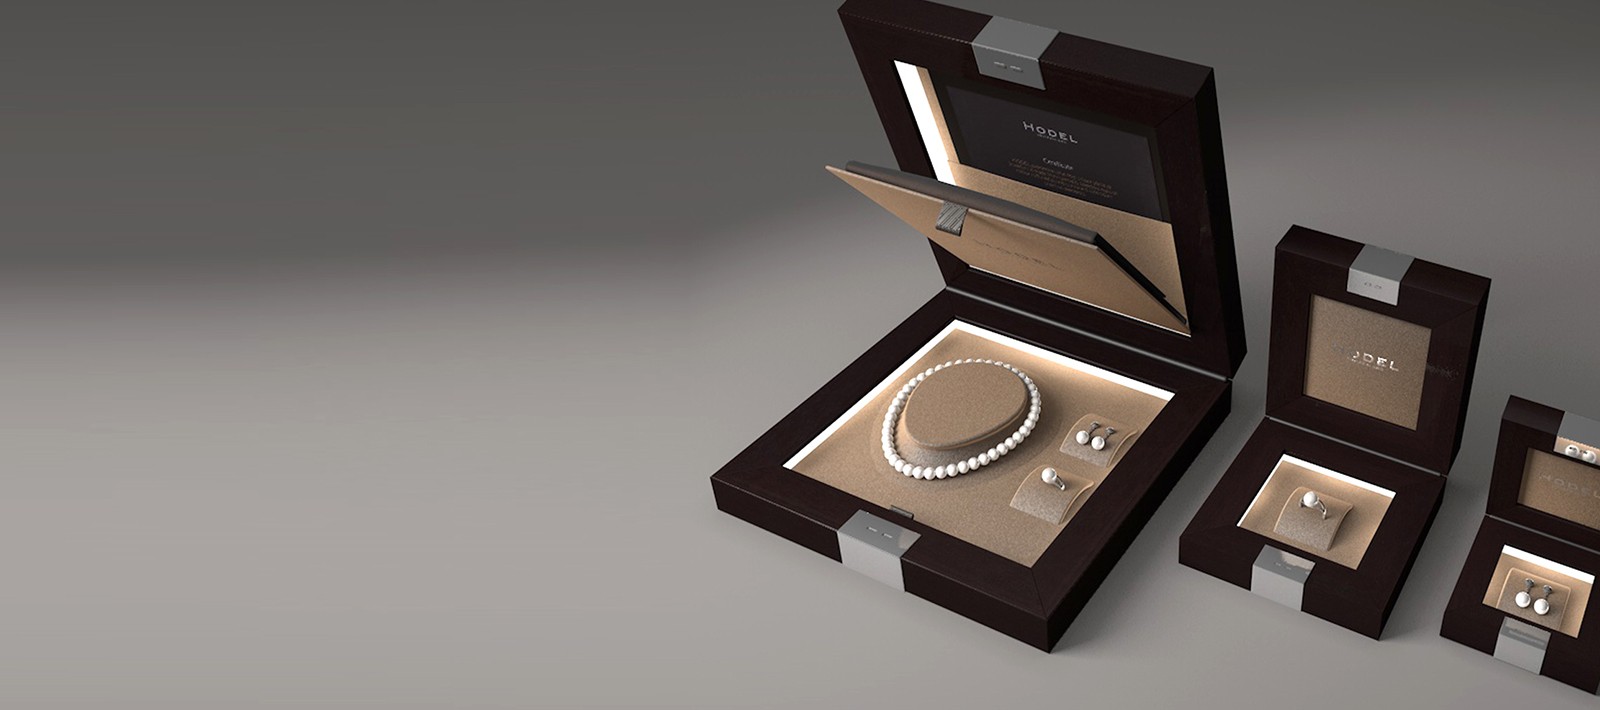 Hodel jewellery packaging design